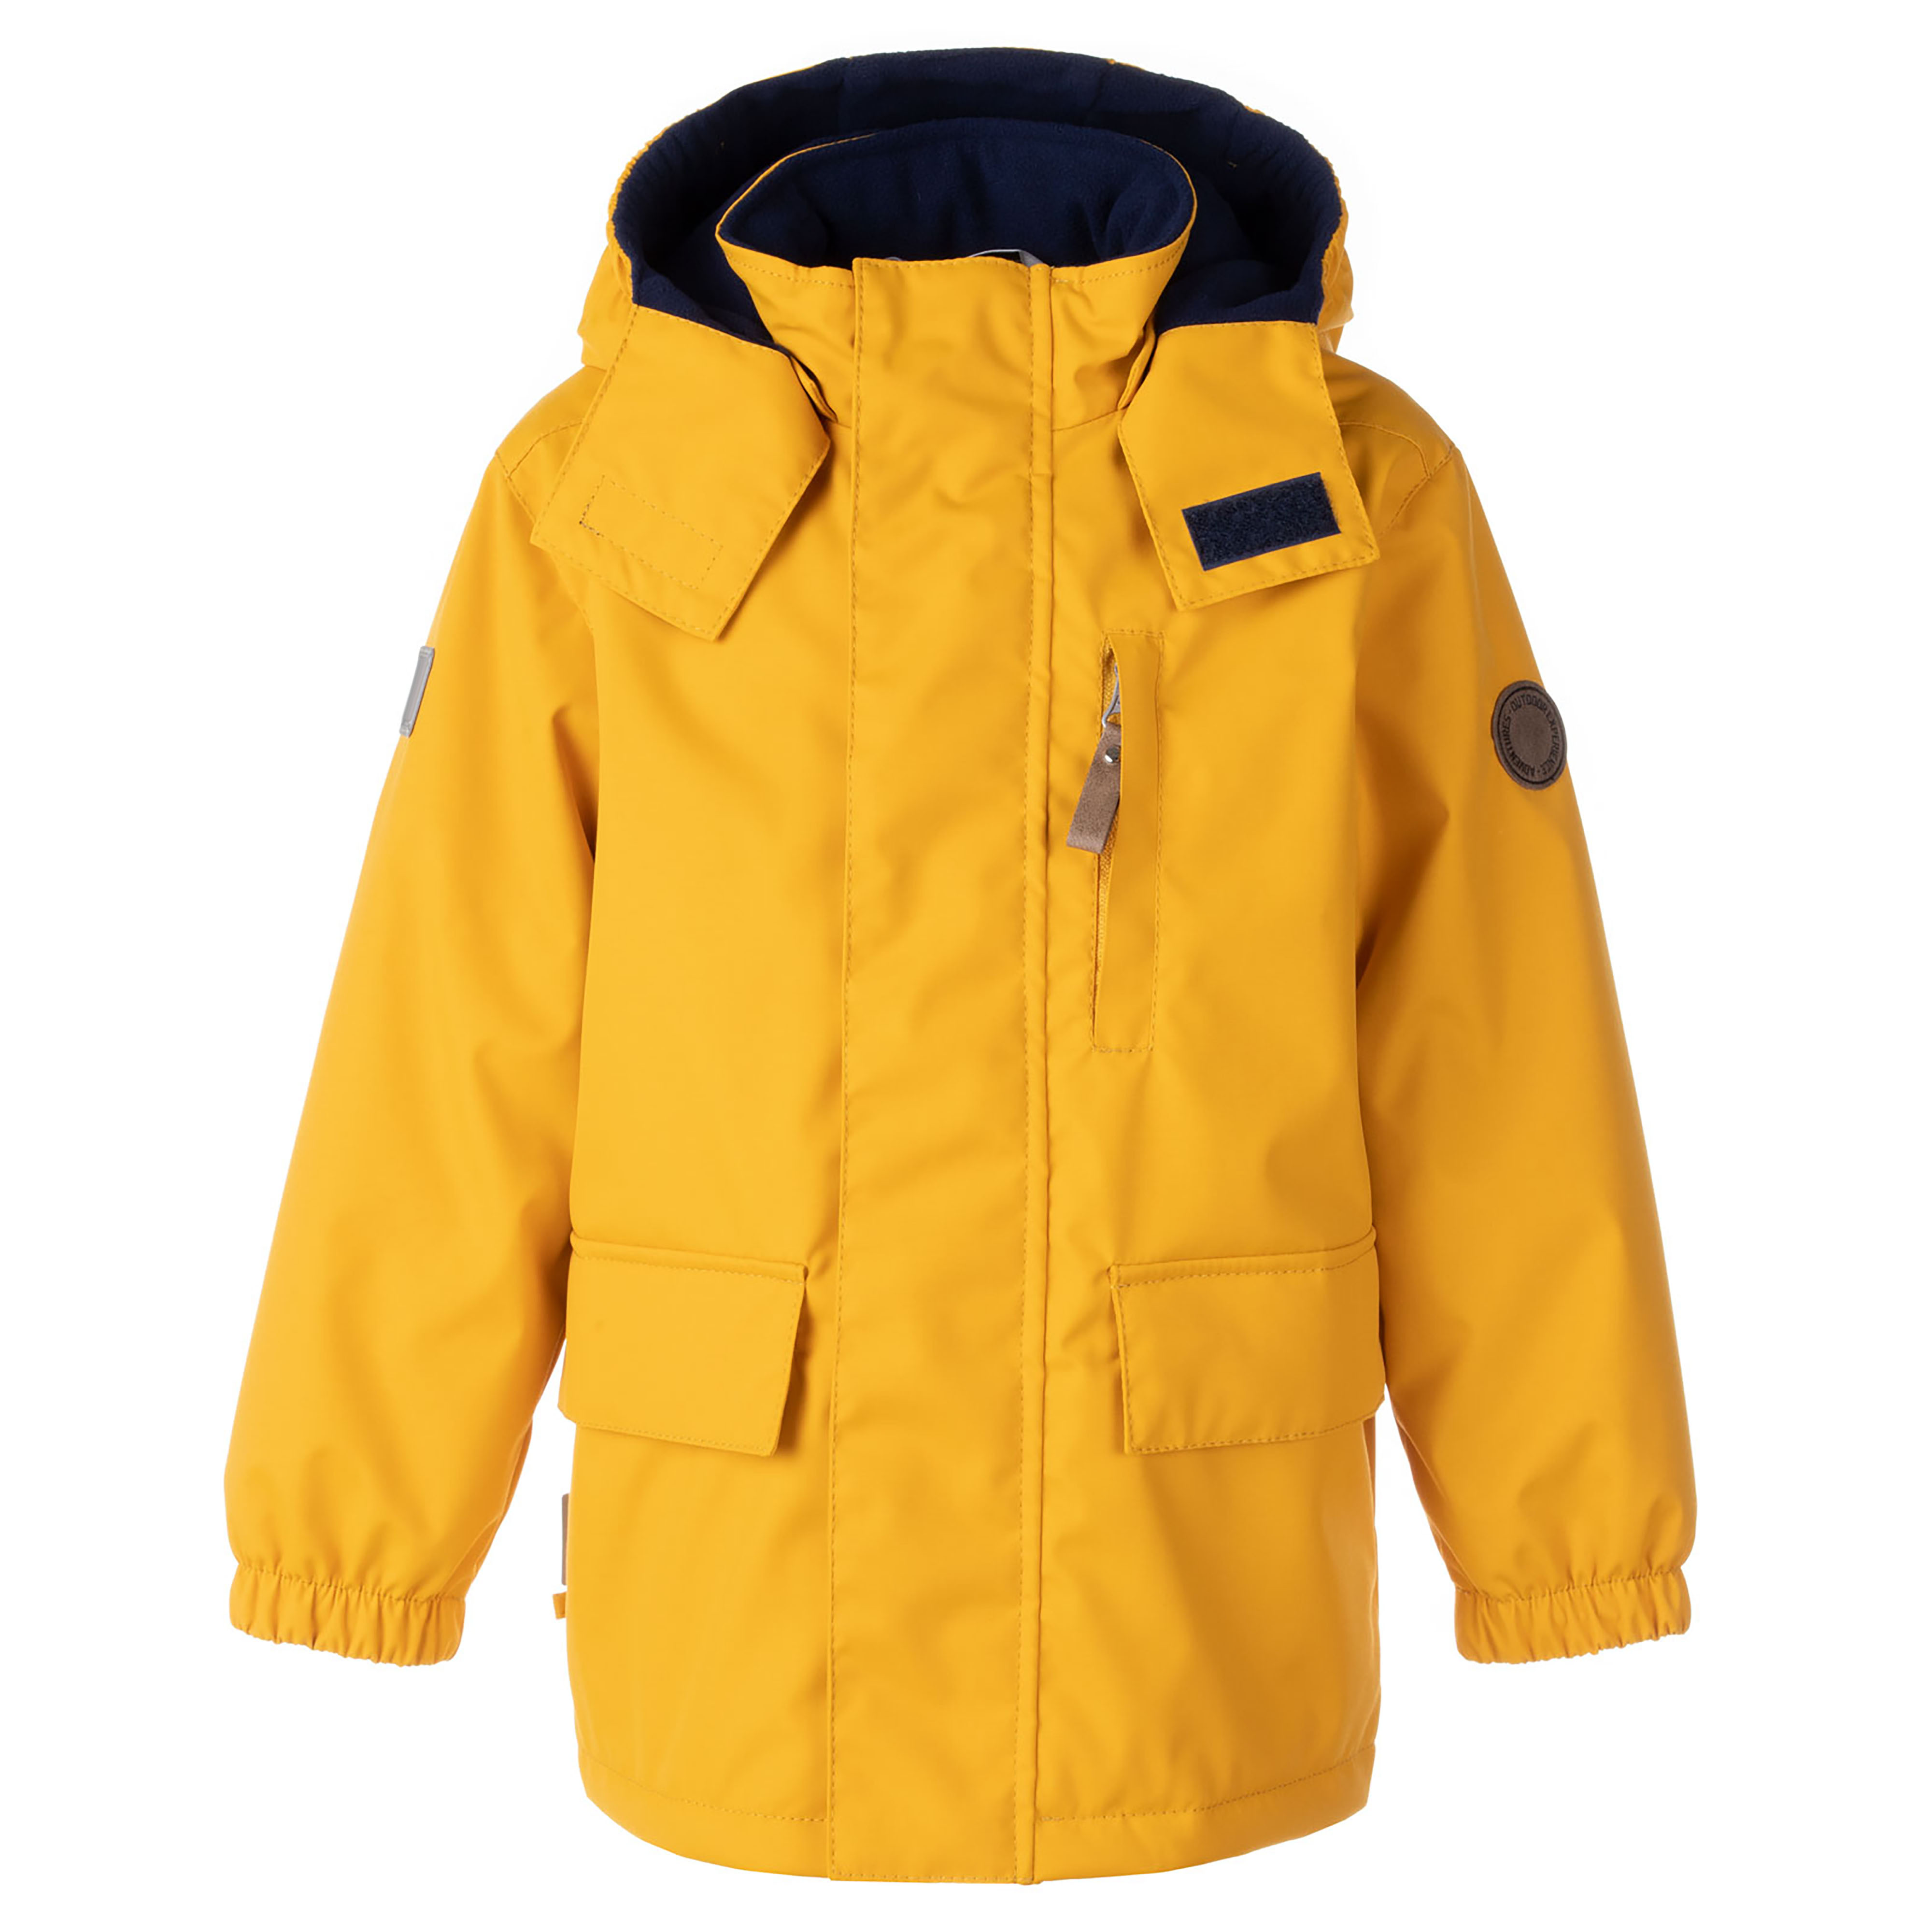 Куртка детская KERRY K23034, желтый, 122 тонер картридж kyocera tk 560y 10000 стр желтый для p6030cdn fs c5300dn fs c5350dn